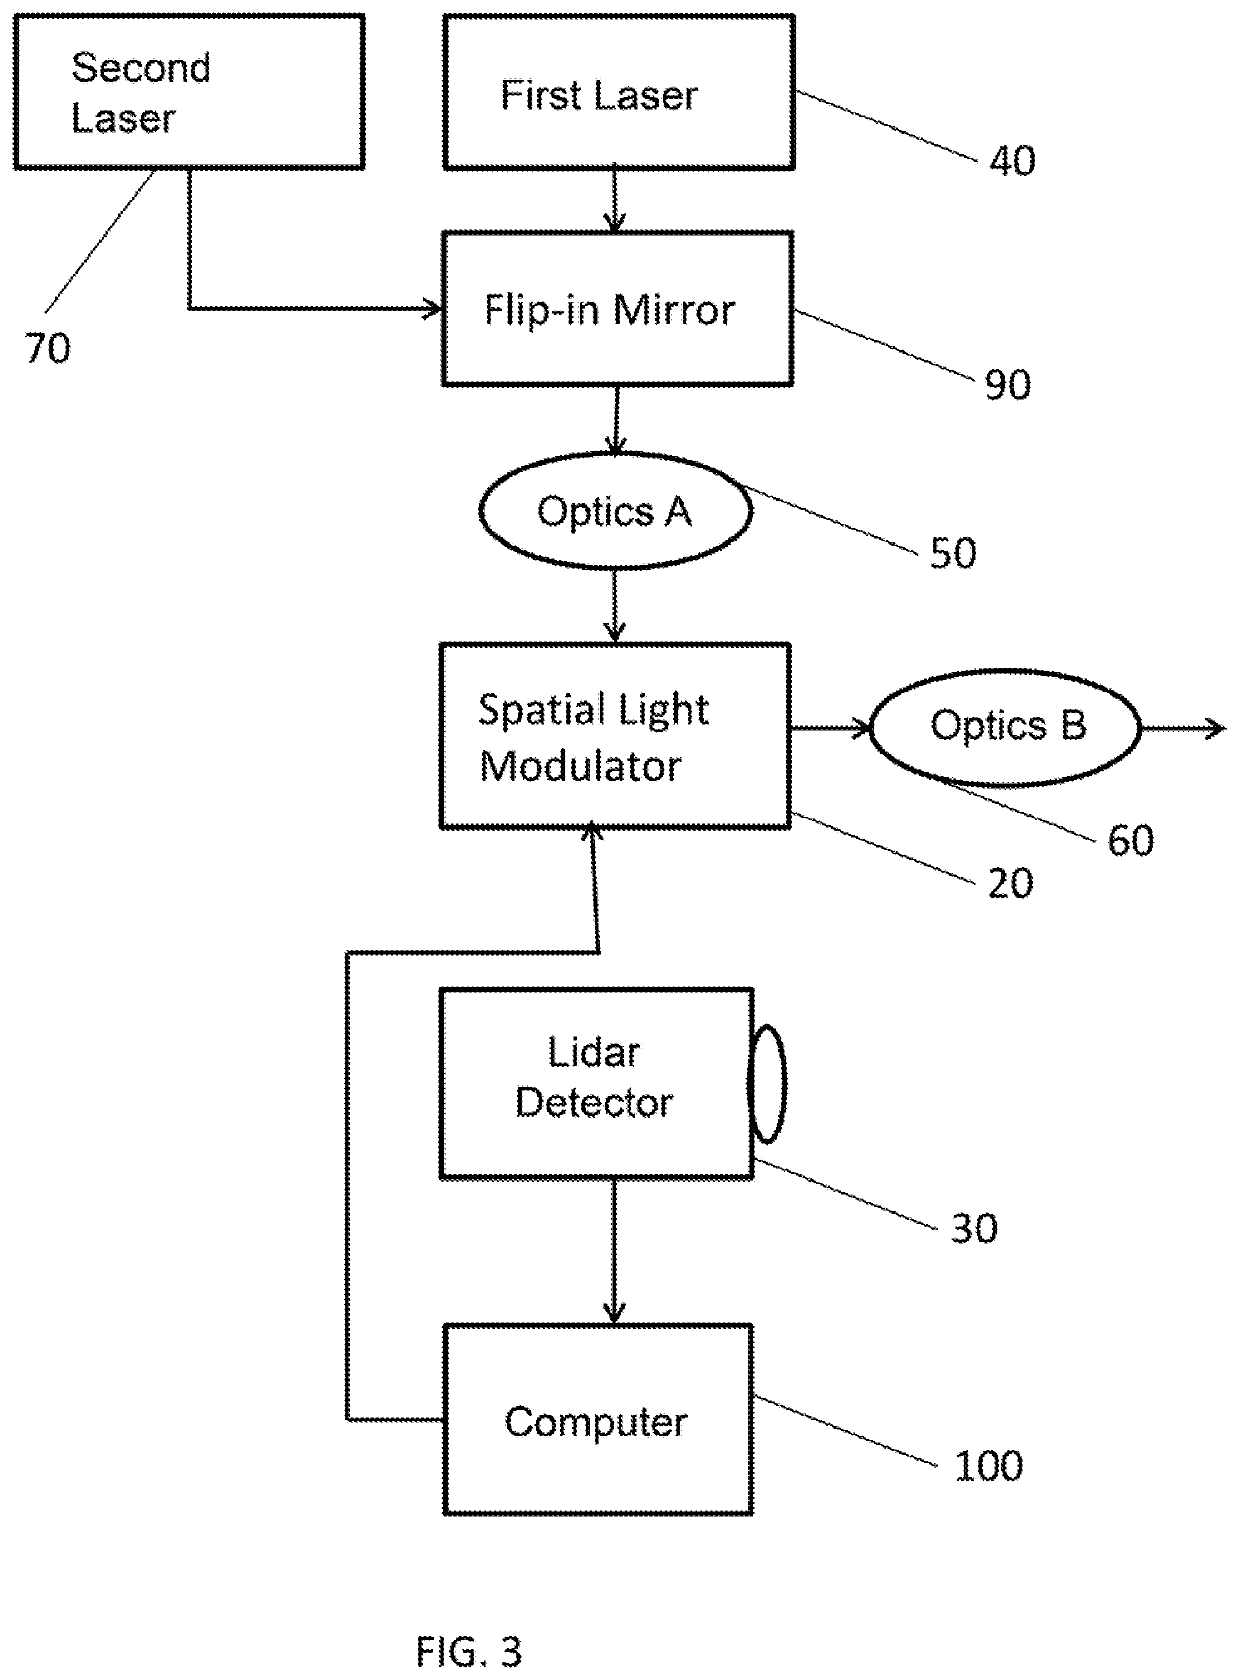 Real-time processing and adaptable illumination lidar camera using a spatial light modulator